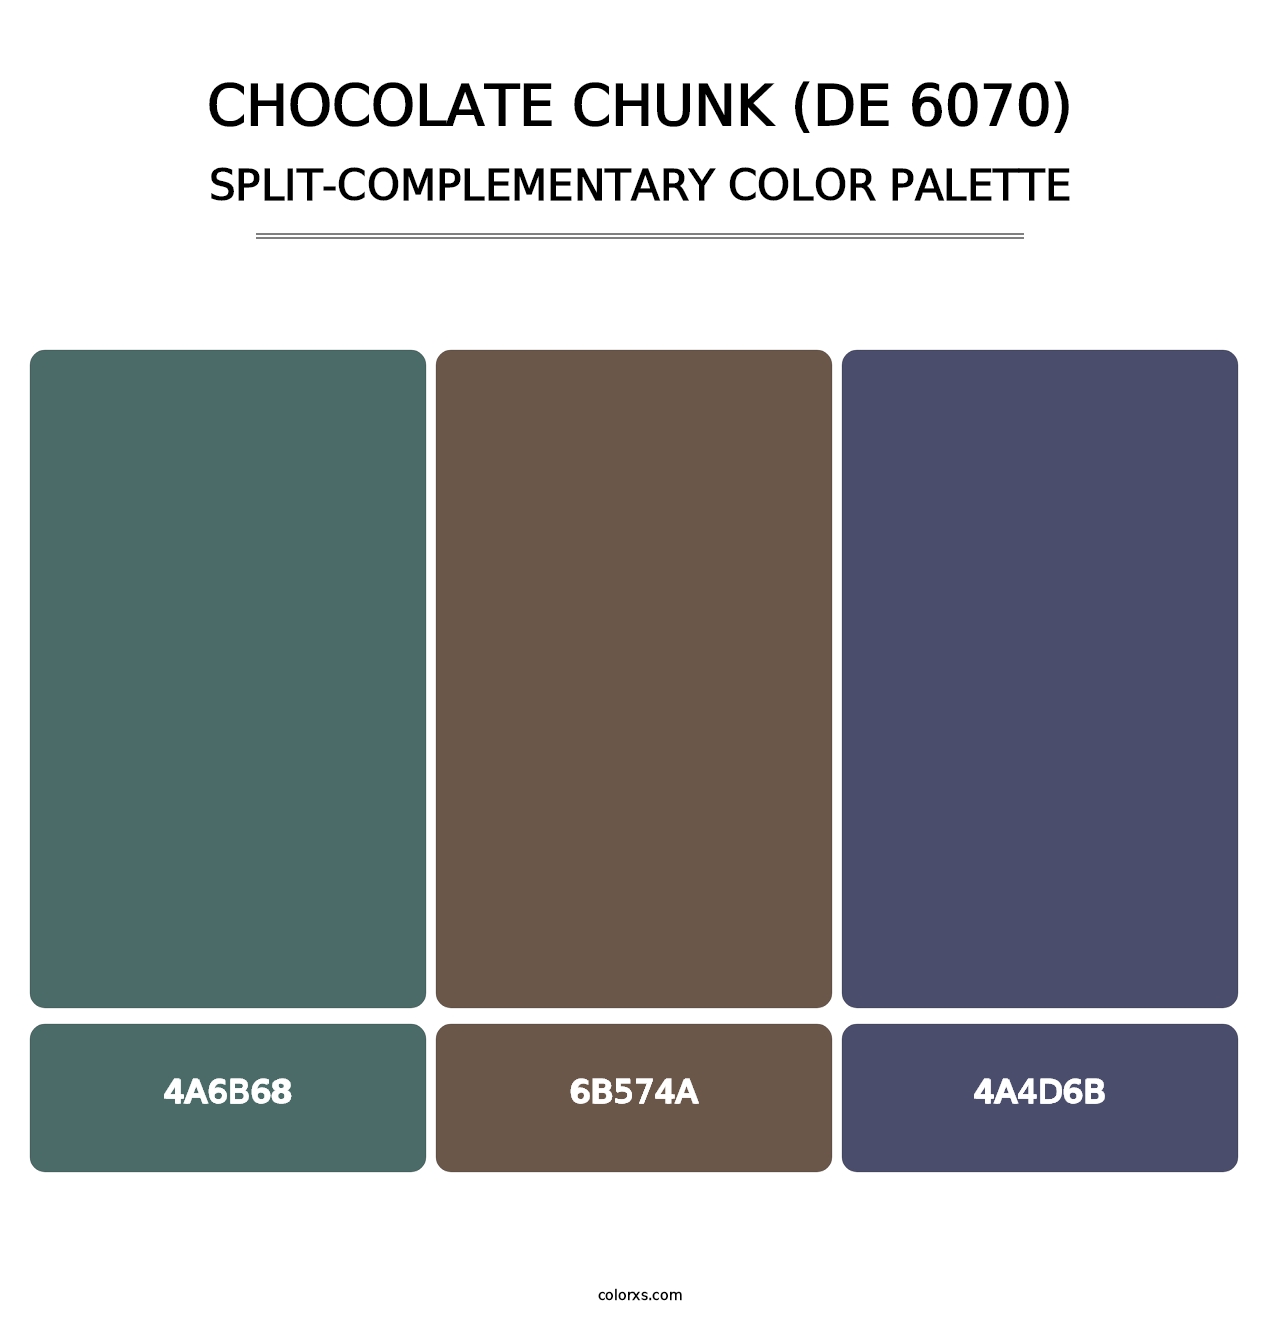 Chocolate Chunk (DE 6070) - Split-Complementary Color Palette